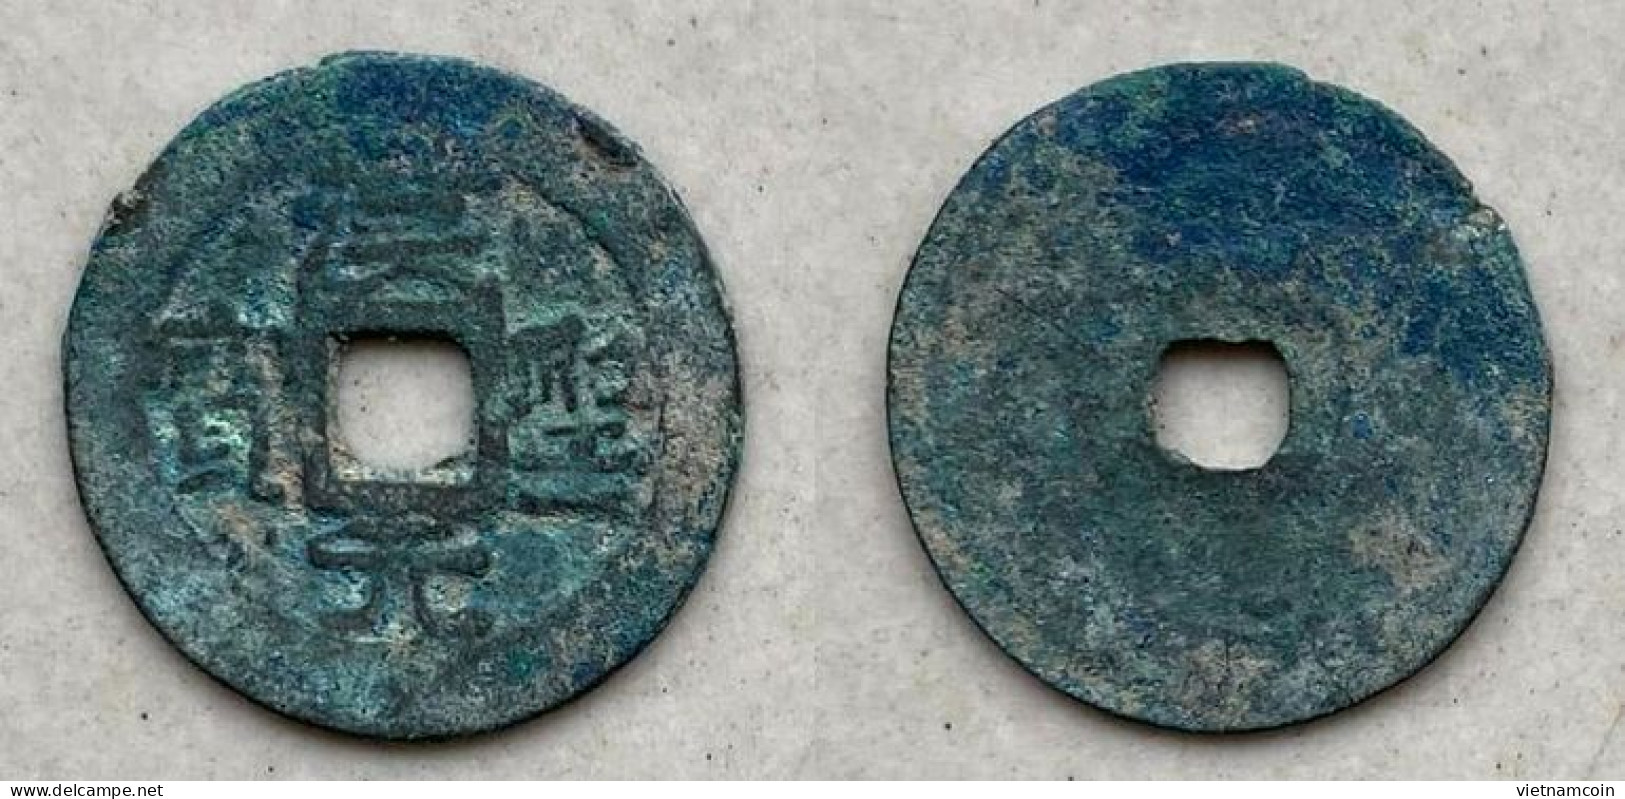 Ancient Annam Coin Han Nguyen Thanh Bao Ho Dynasty 1400-1407 Dr. Allan Barker 124.1 - Vietnam